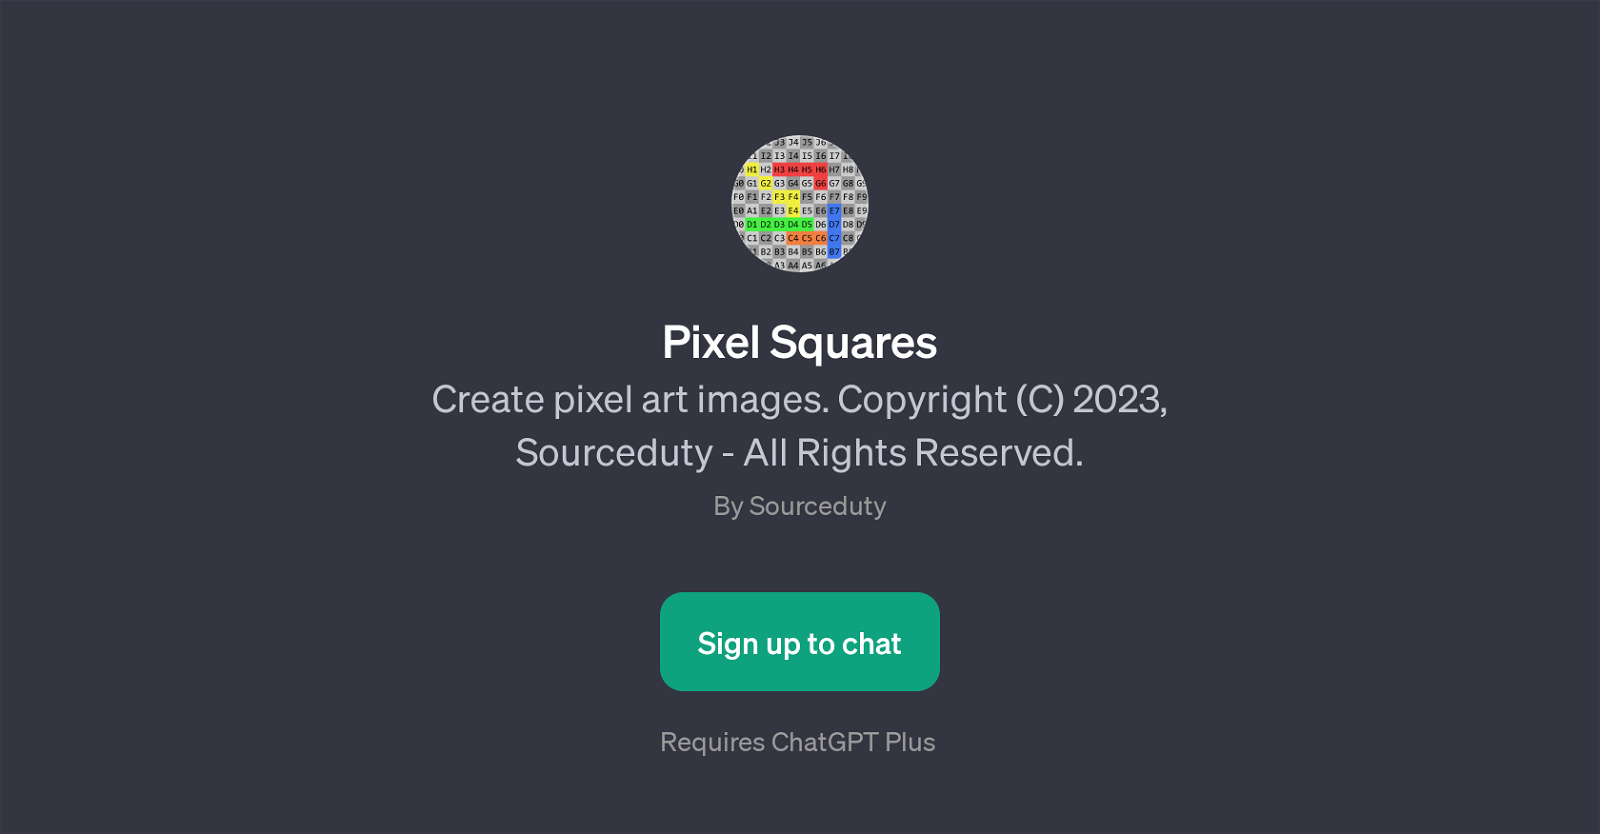 Pixel Squares website